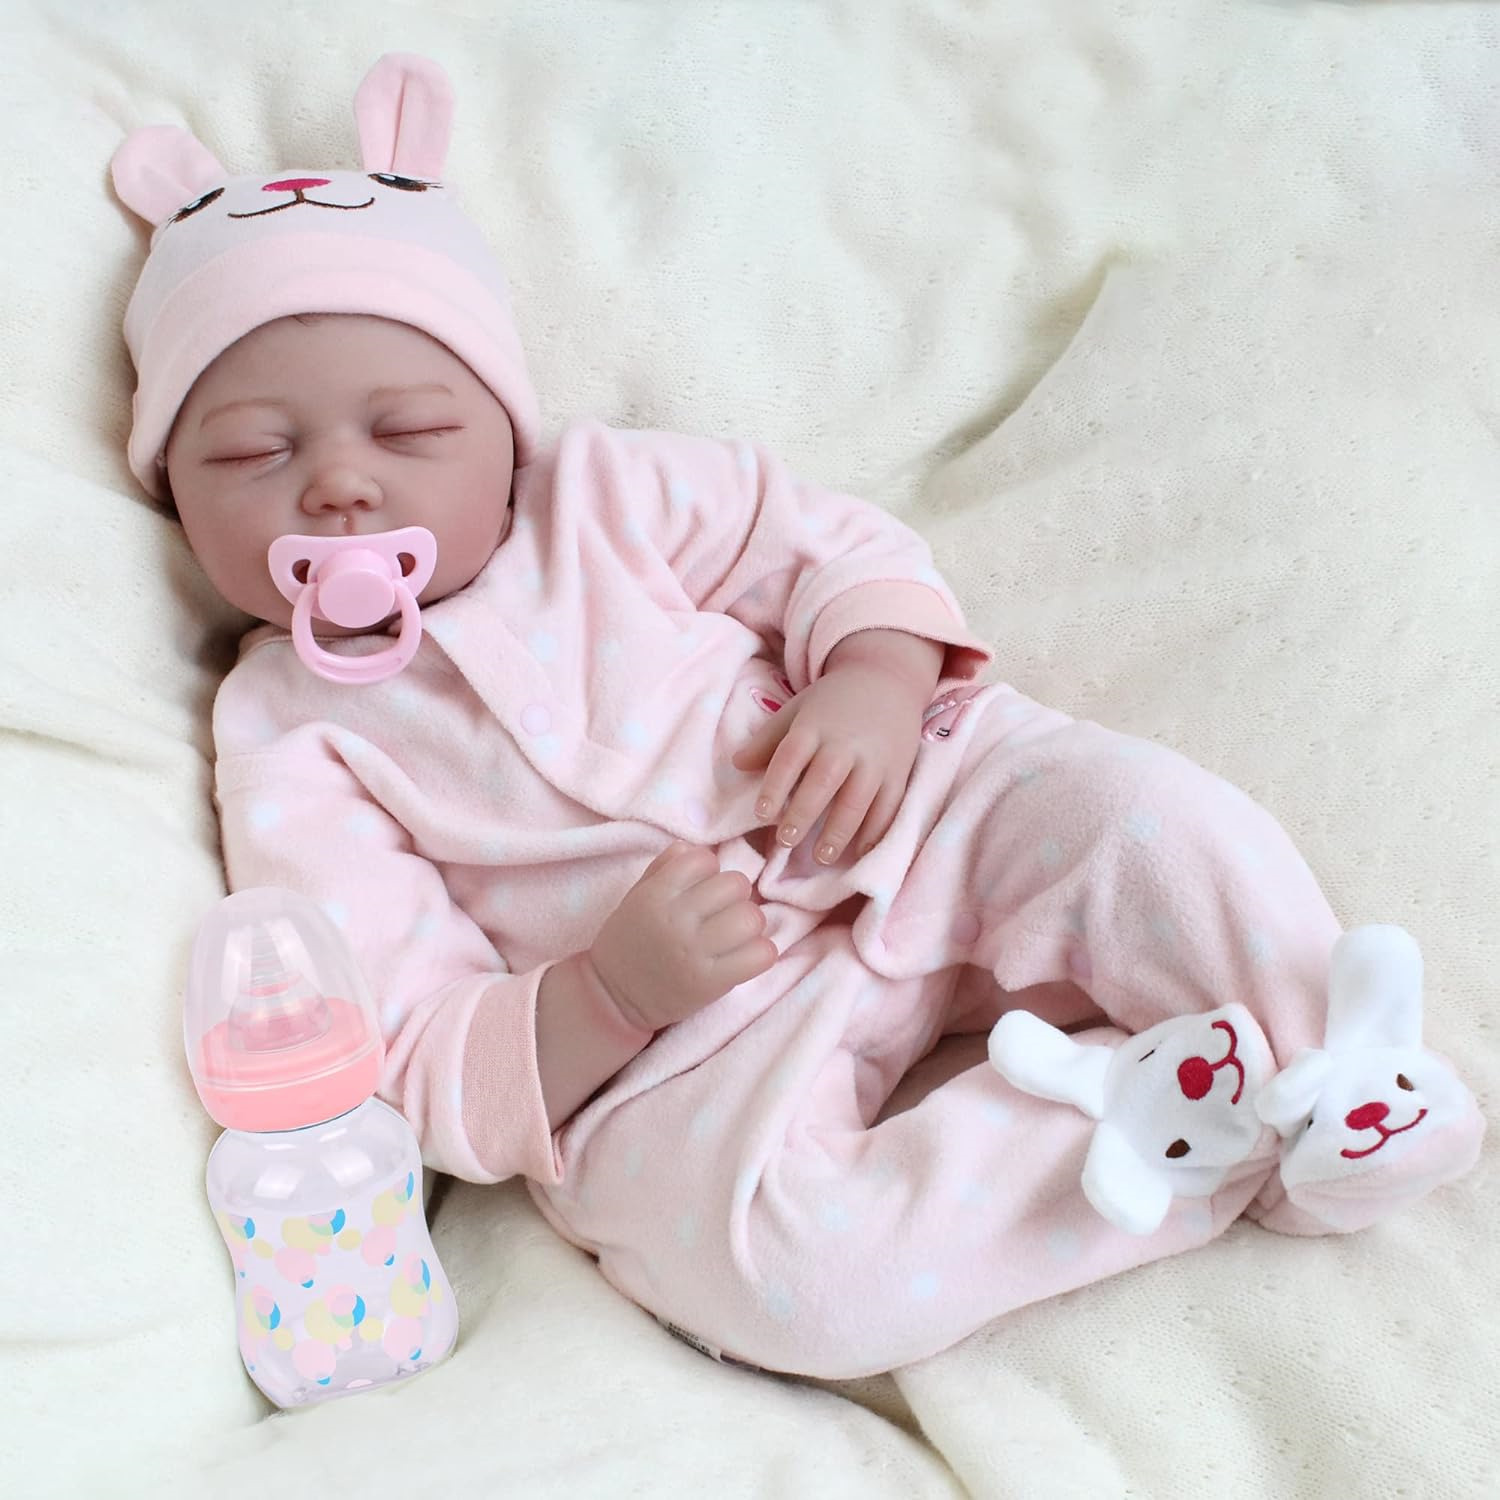 CHAREX Reborn Baby Dolls, 22 inch Sleeping Baby Girl Doll Lifelike Newborn Baby